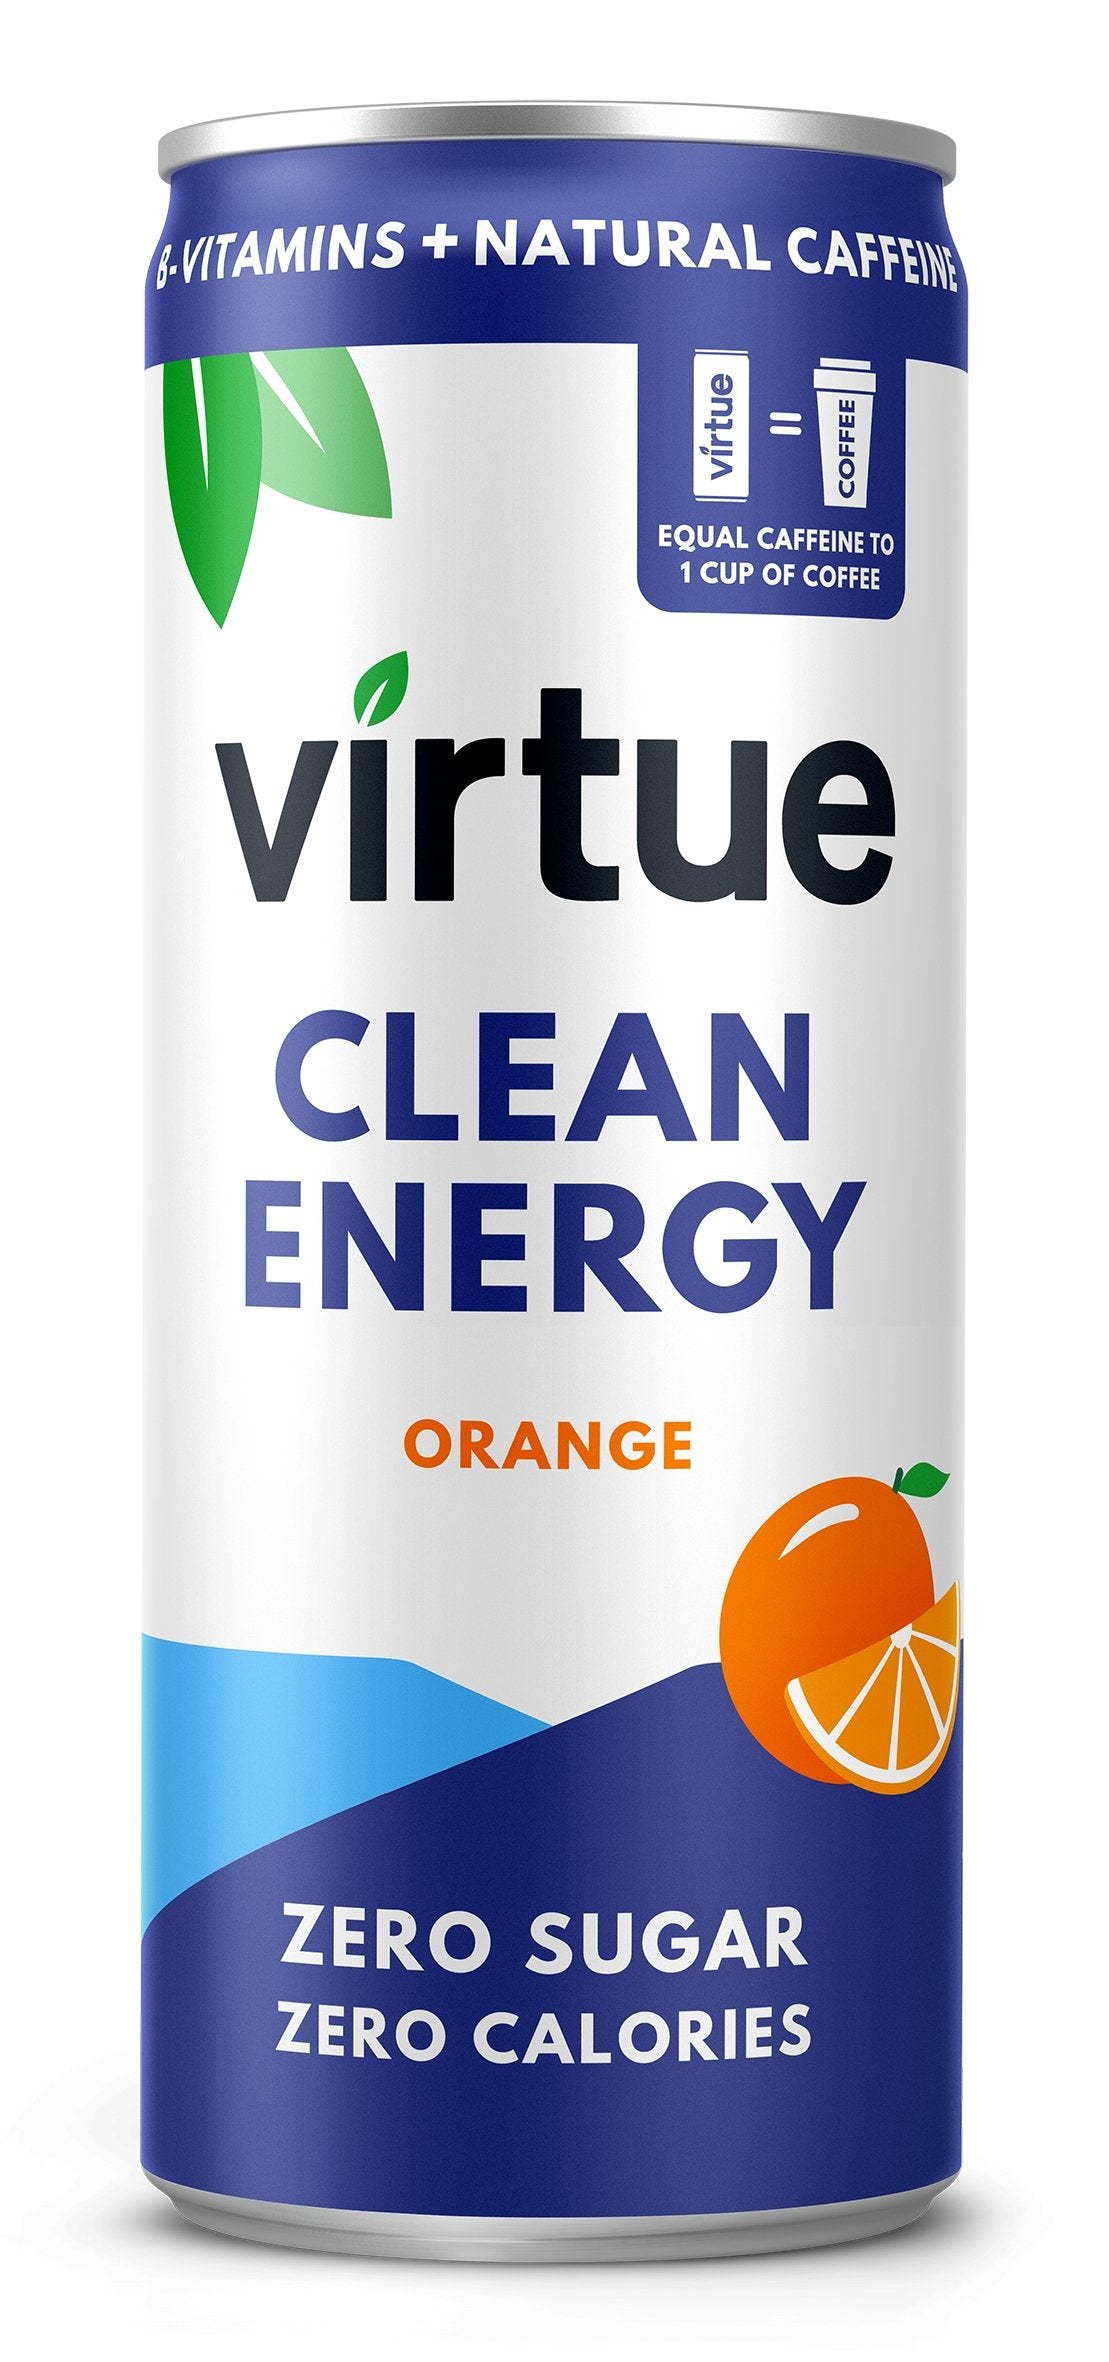 Virtue Clean Energy Drinks 250ml - Null sukker, null kalorier - theskinnyfoodco